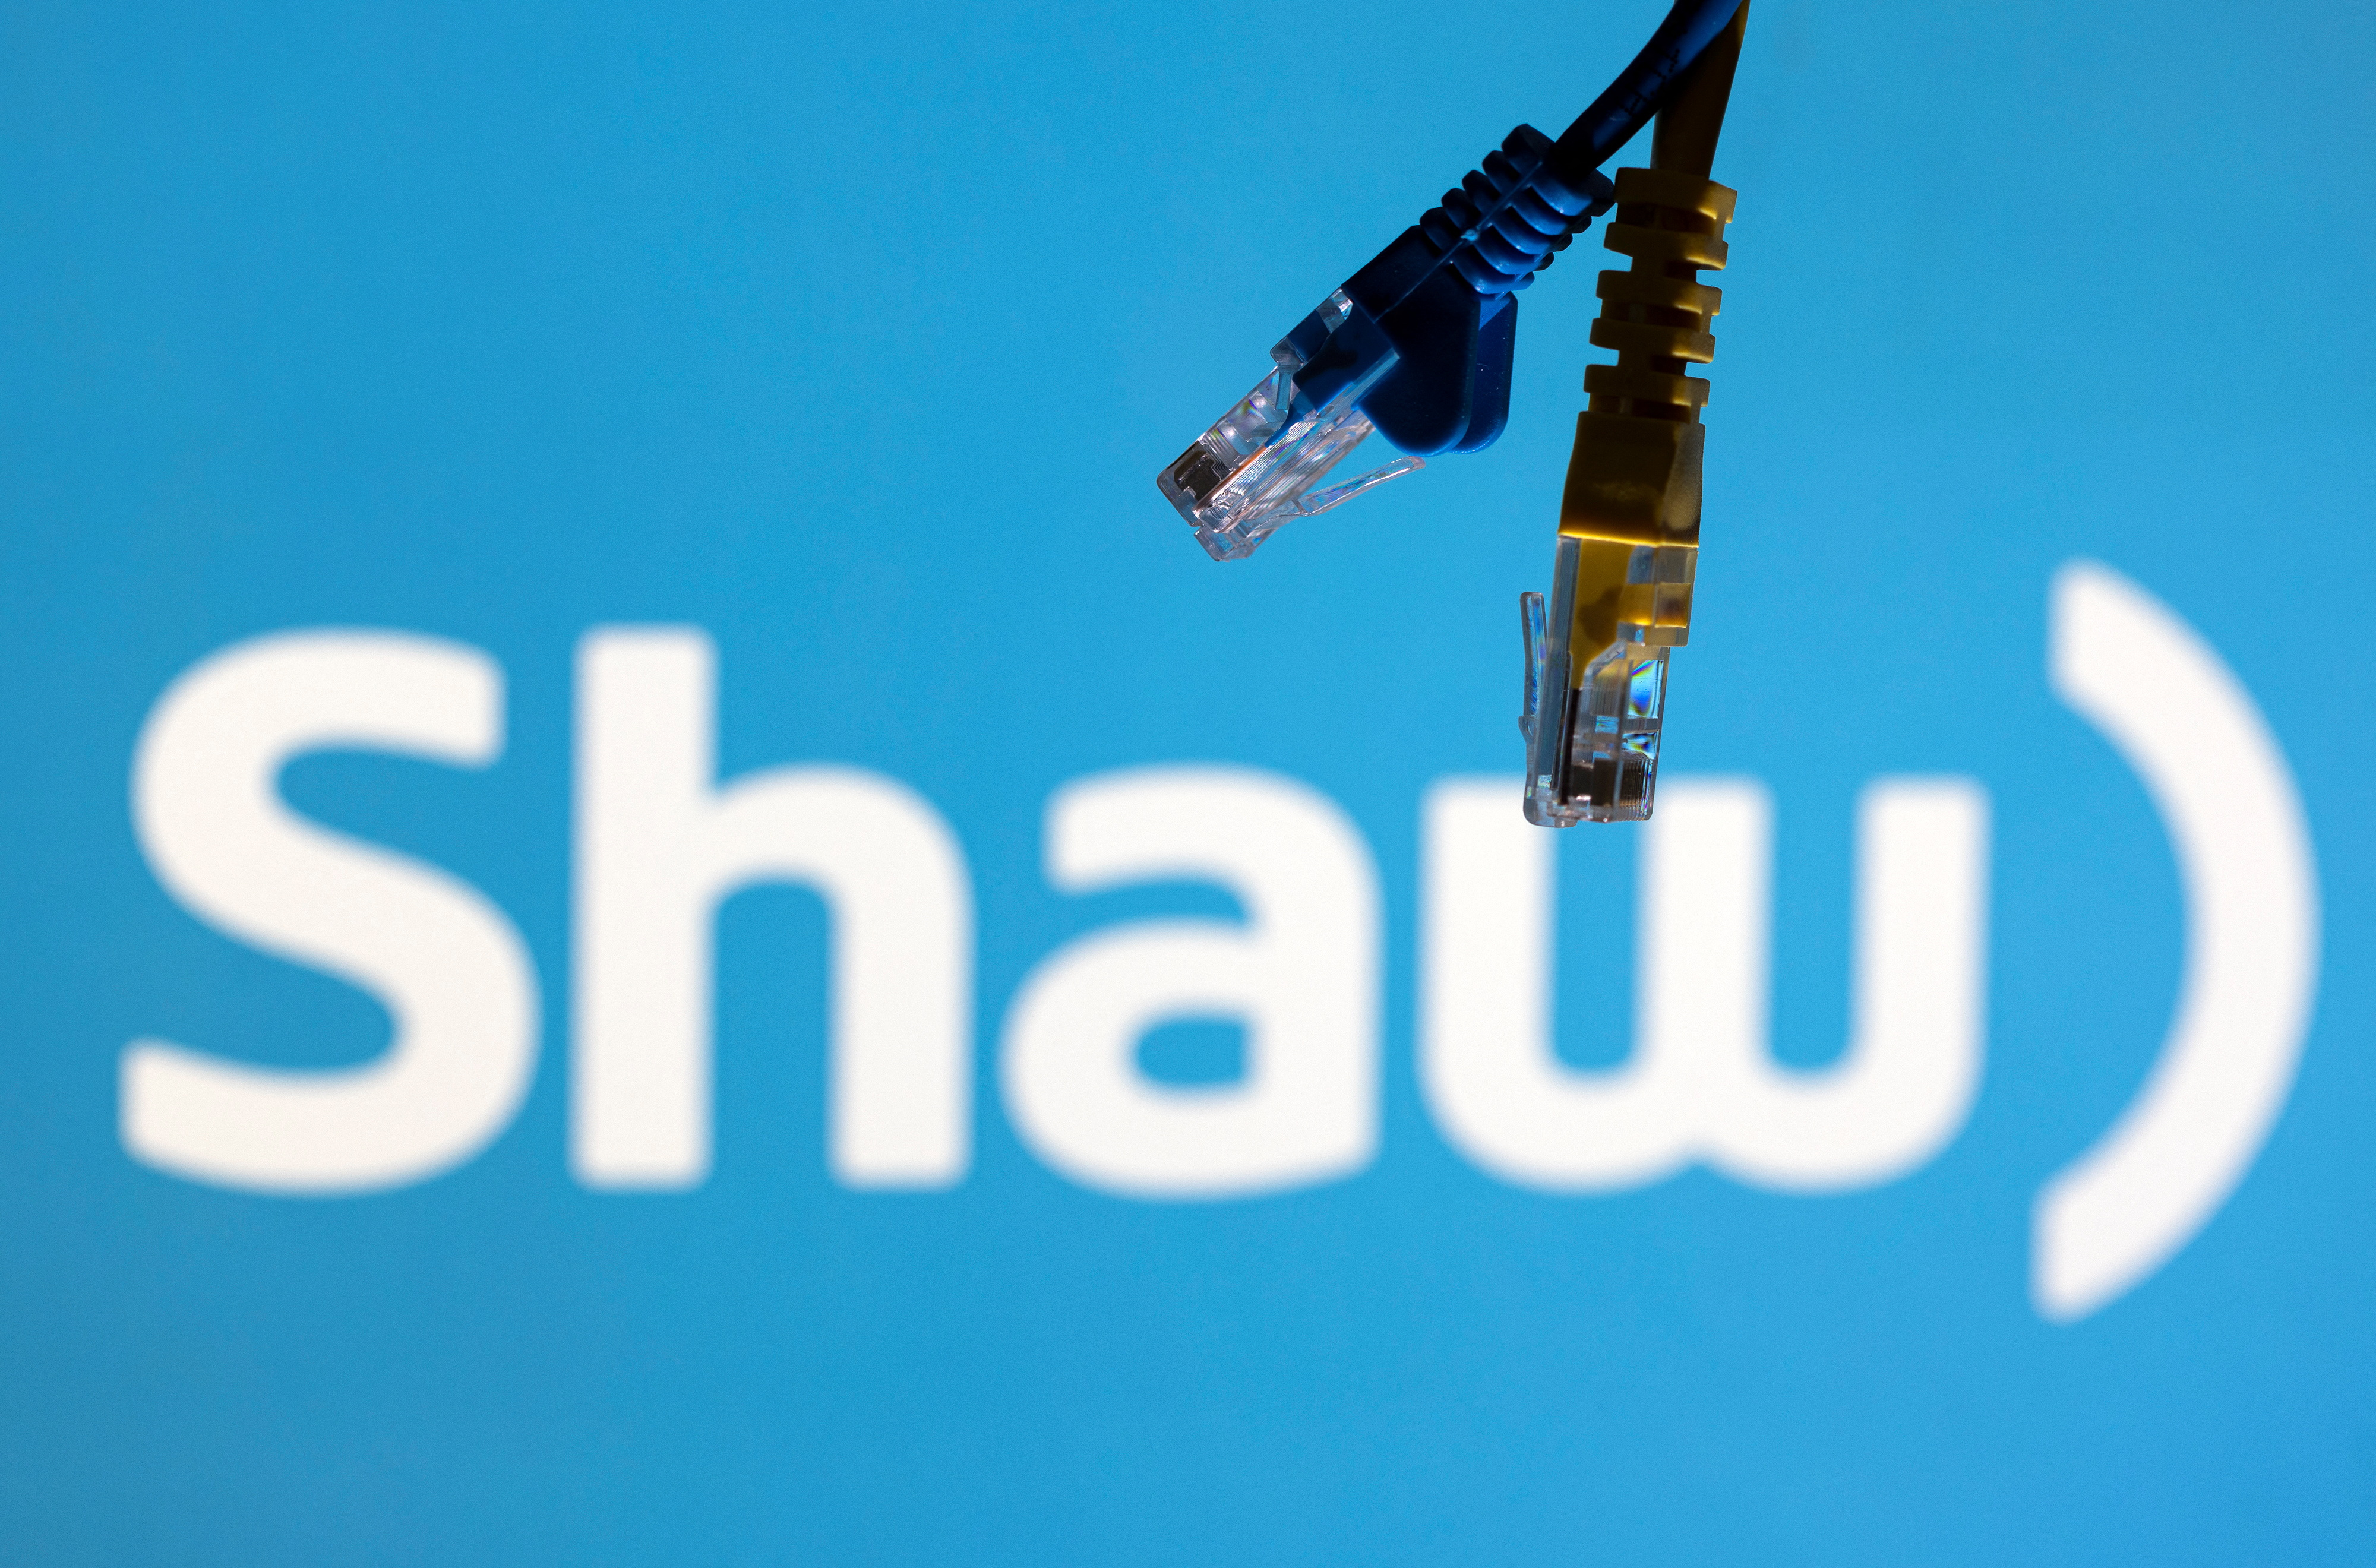 Illustration shows Shaw Communications logo